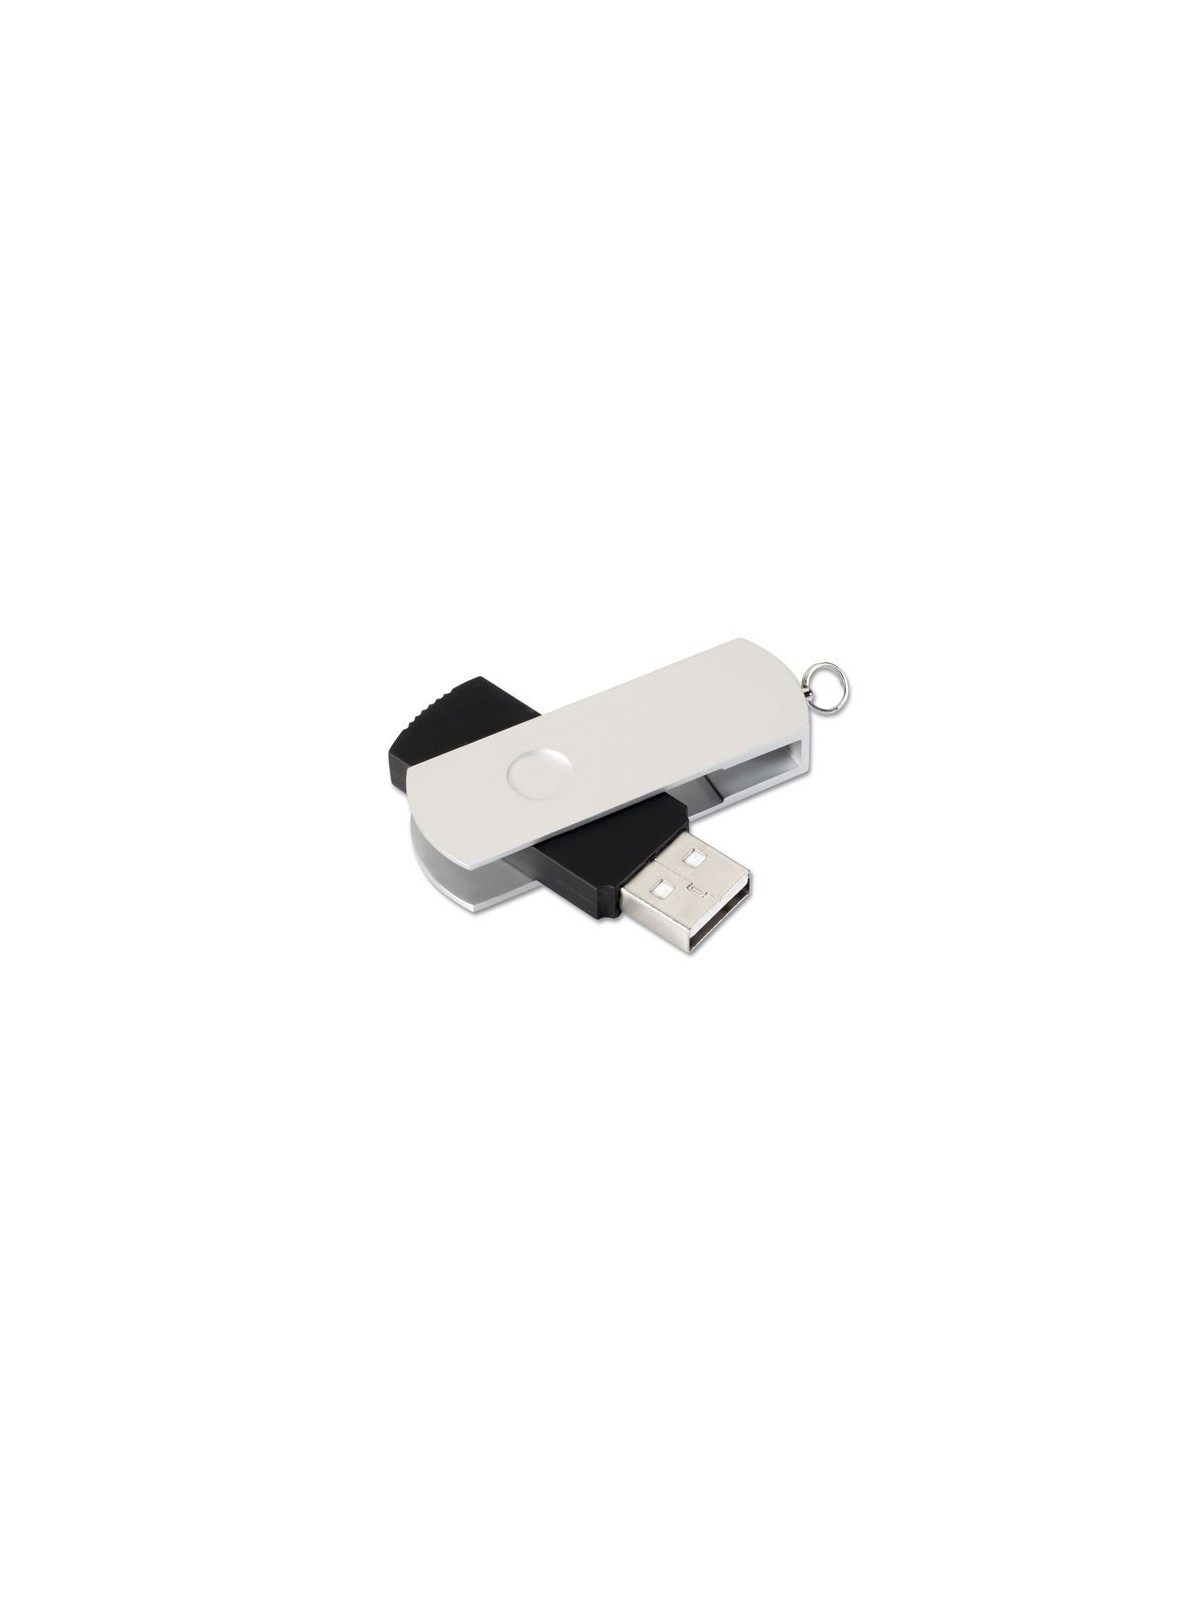 42-691 Clé USB rotative aluminium  personnalisé